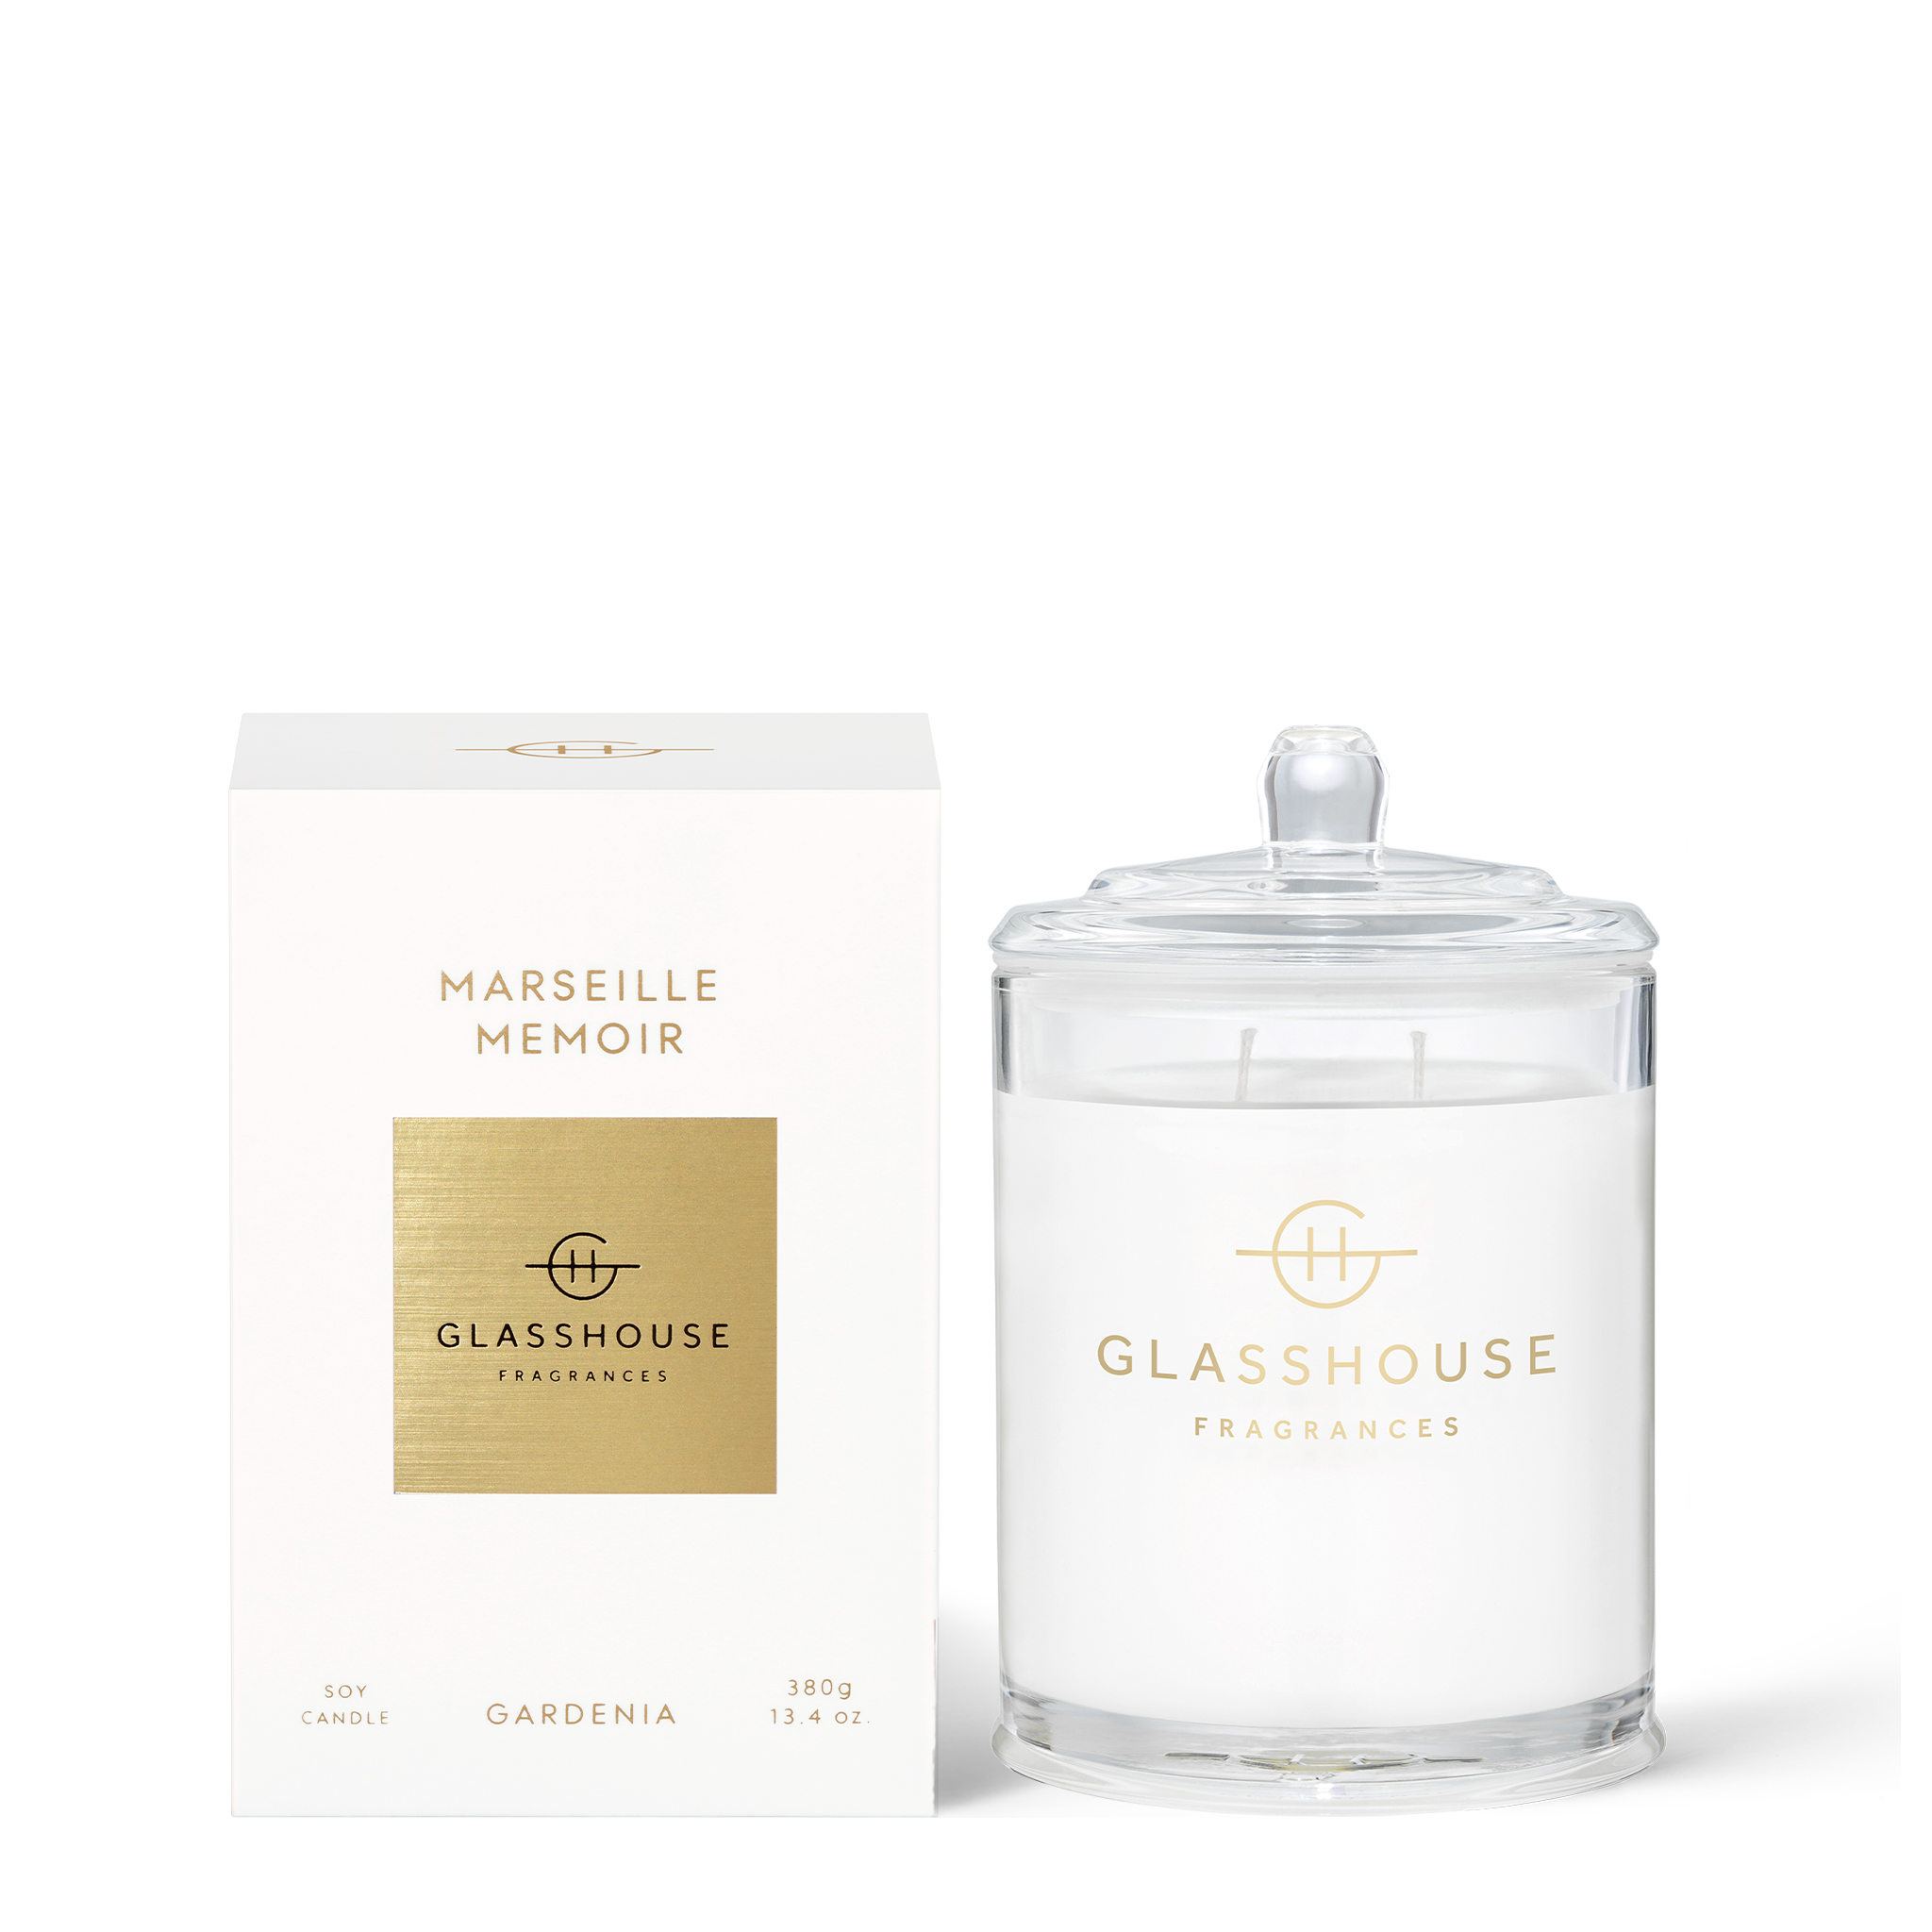 GLASSHOUSE | MARSEILLE MEMOIR - 380G CANDLE